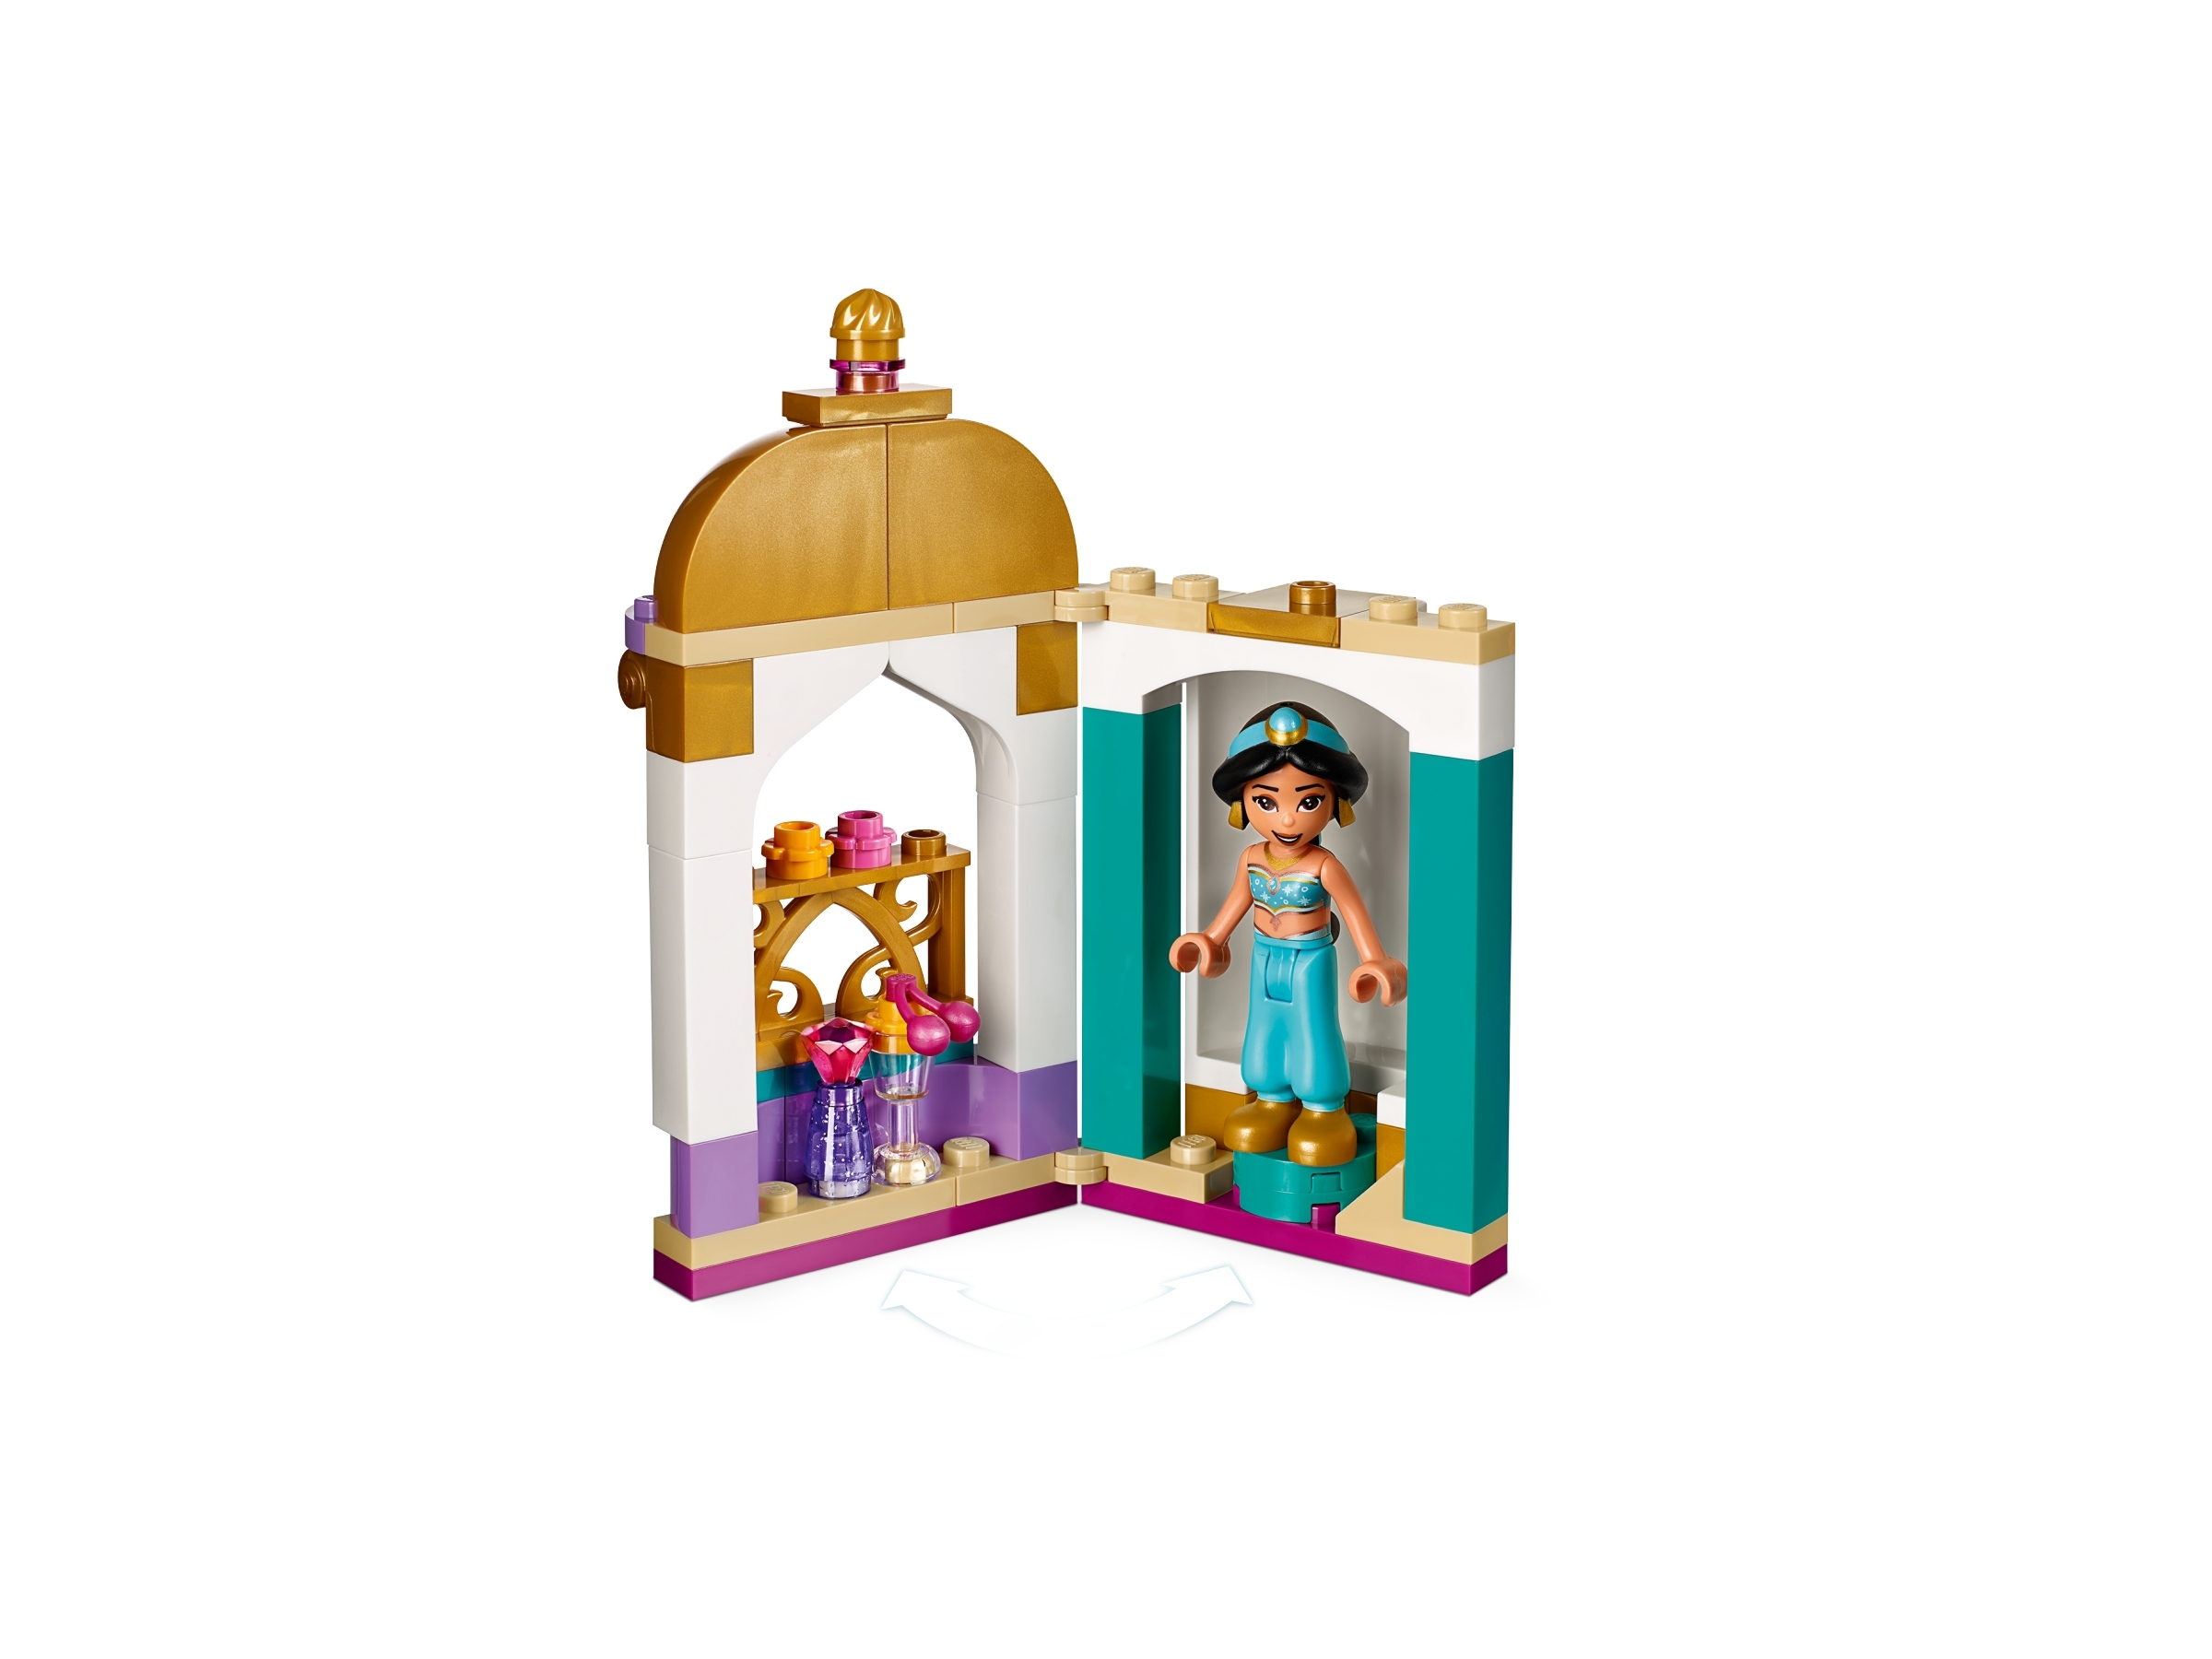 LEGO Disney Princess 41158 Jasmine/'s Petite Tower 49pcs Set Building Blocks Toy